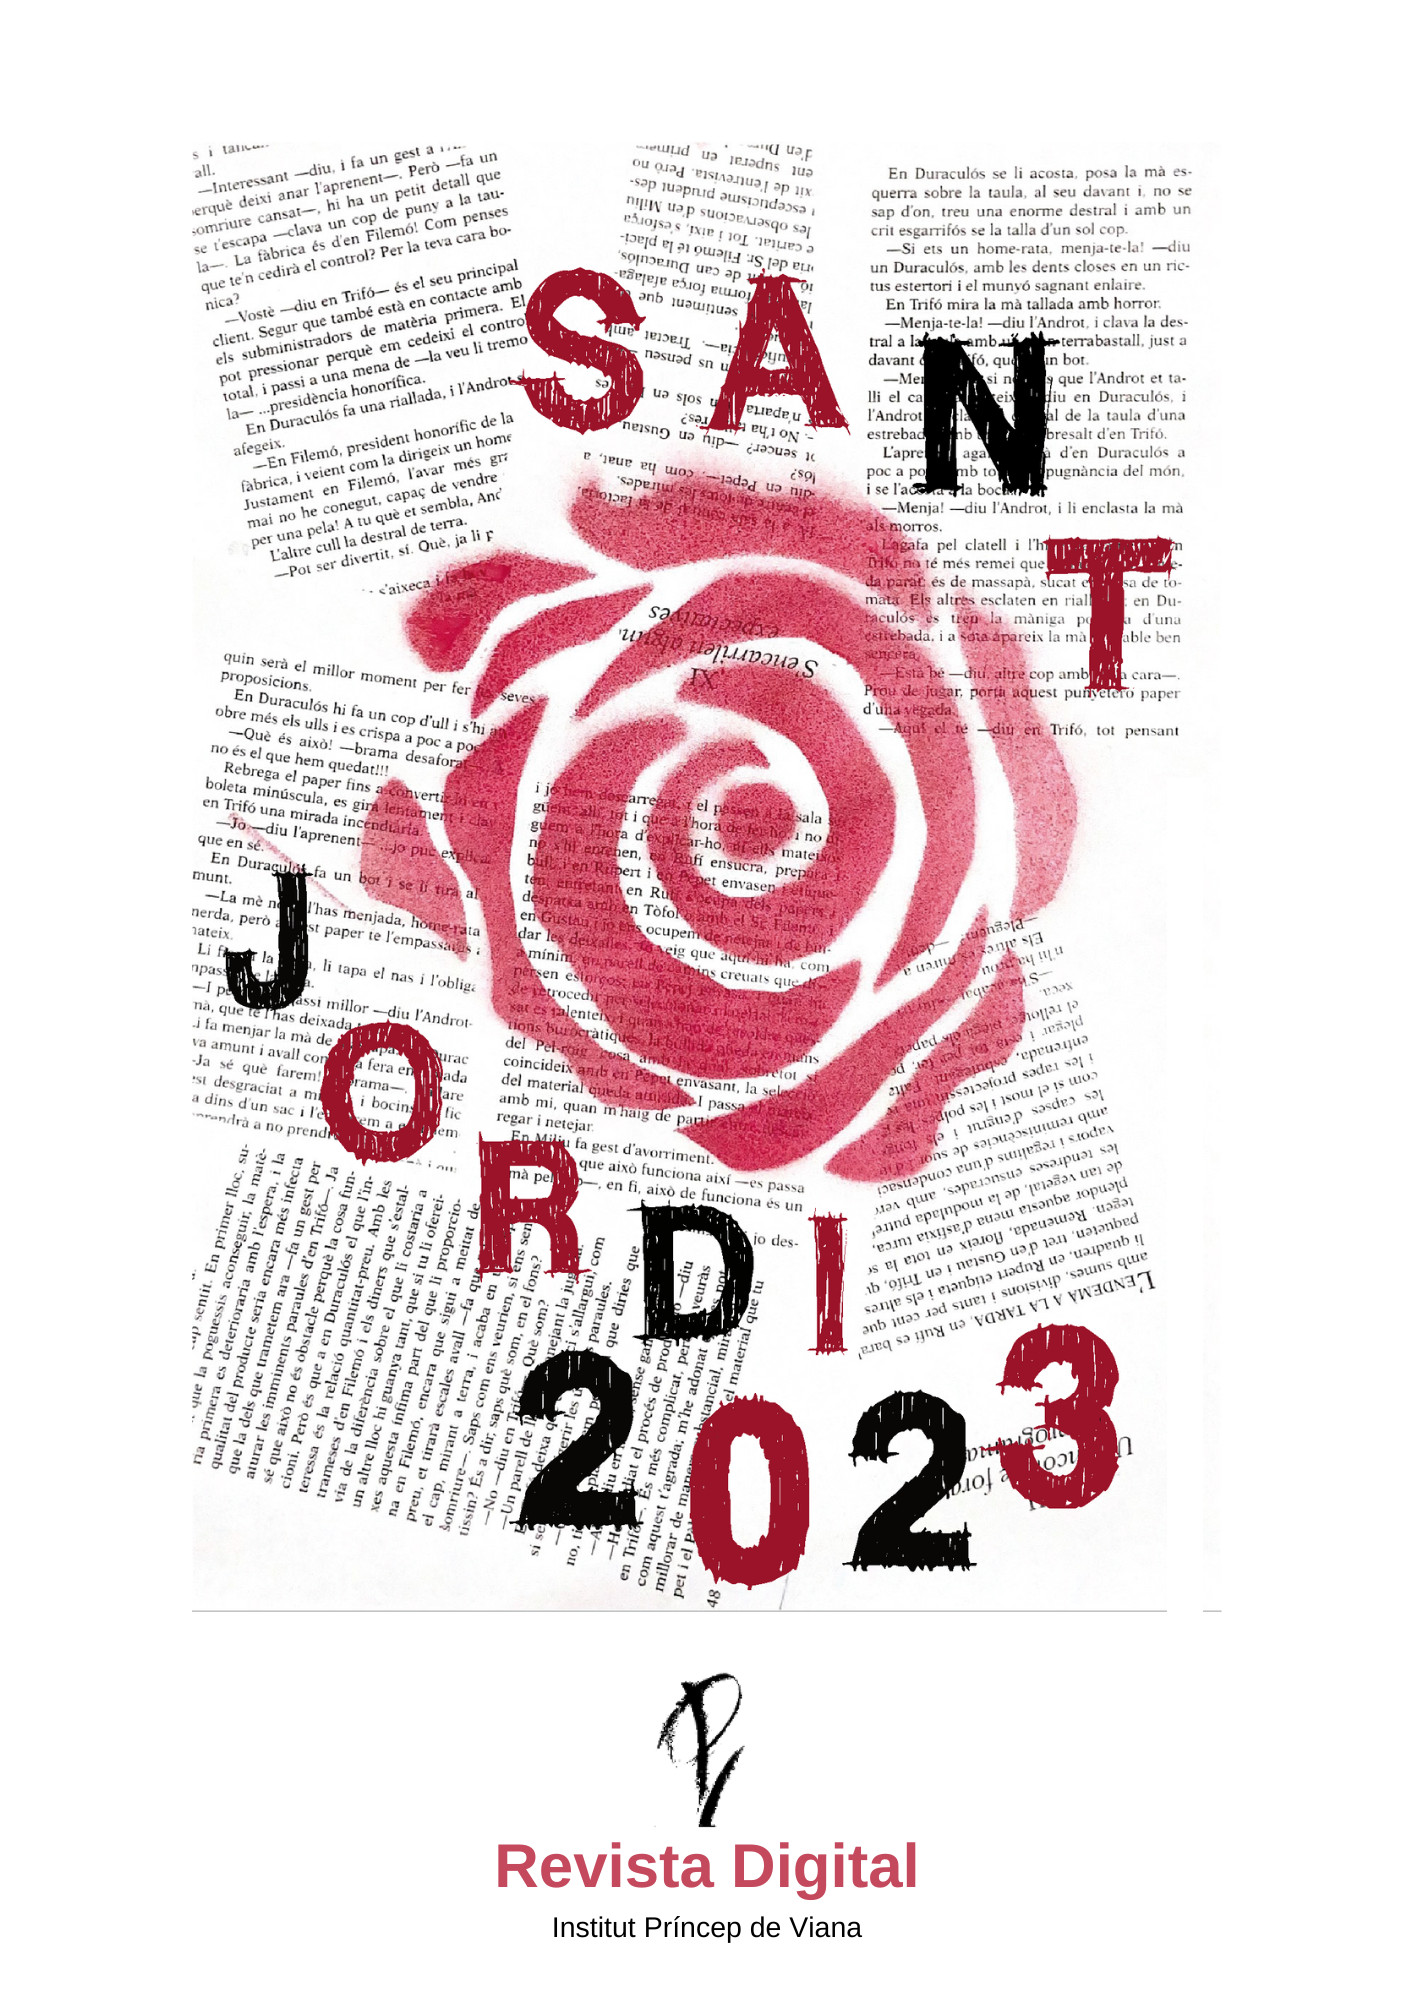 SANT JORDI 2023